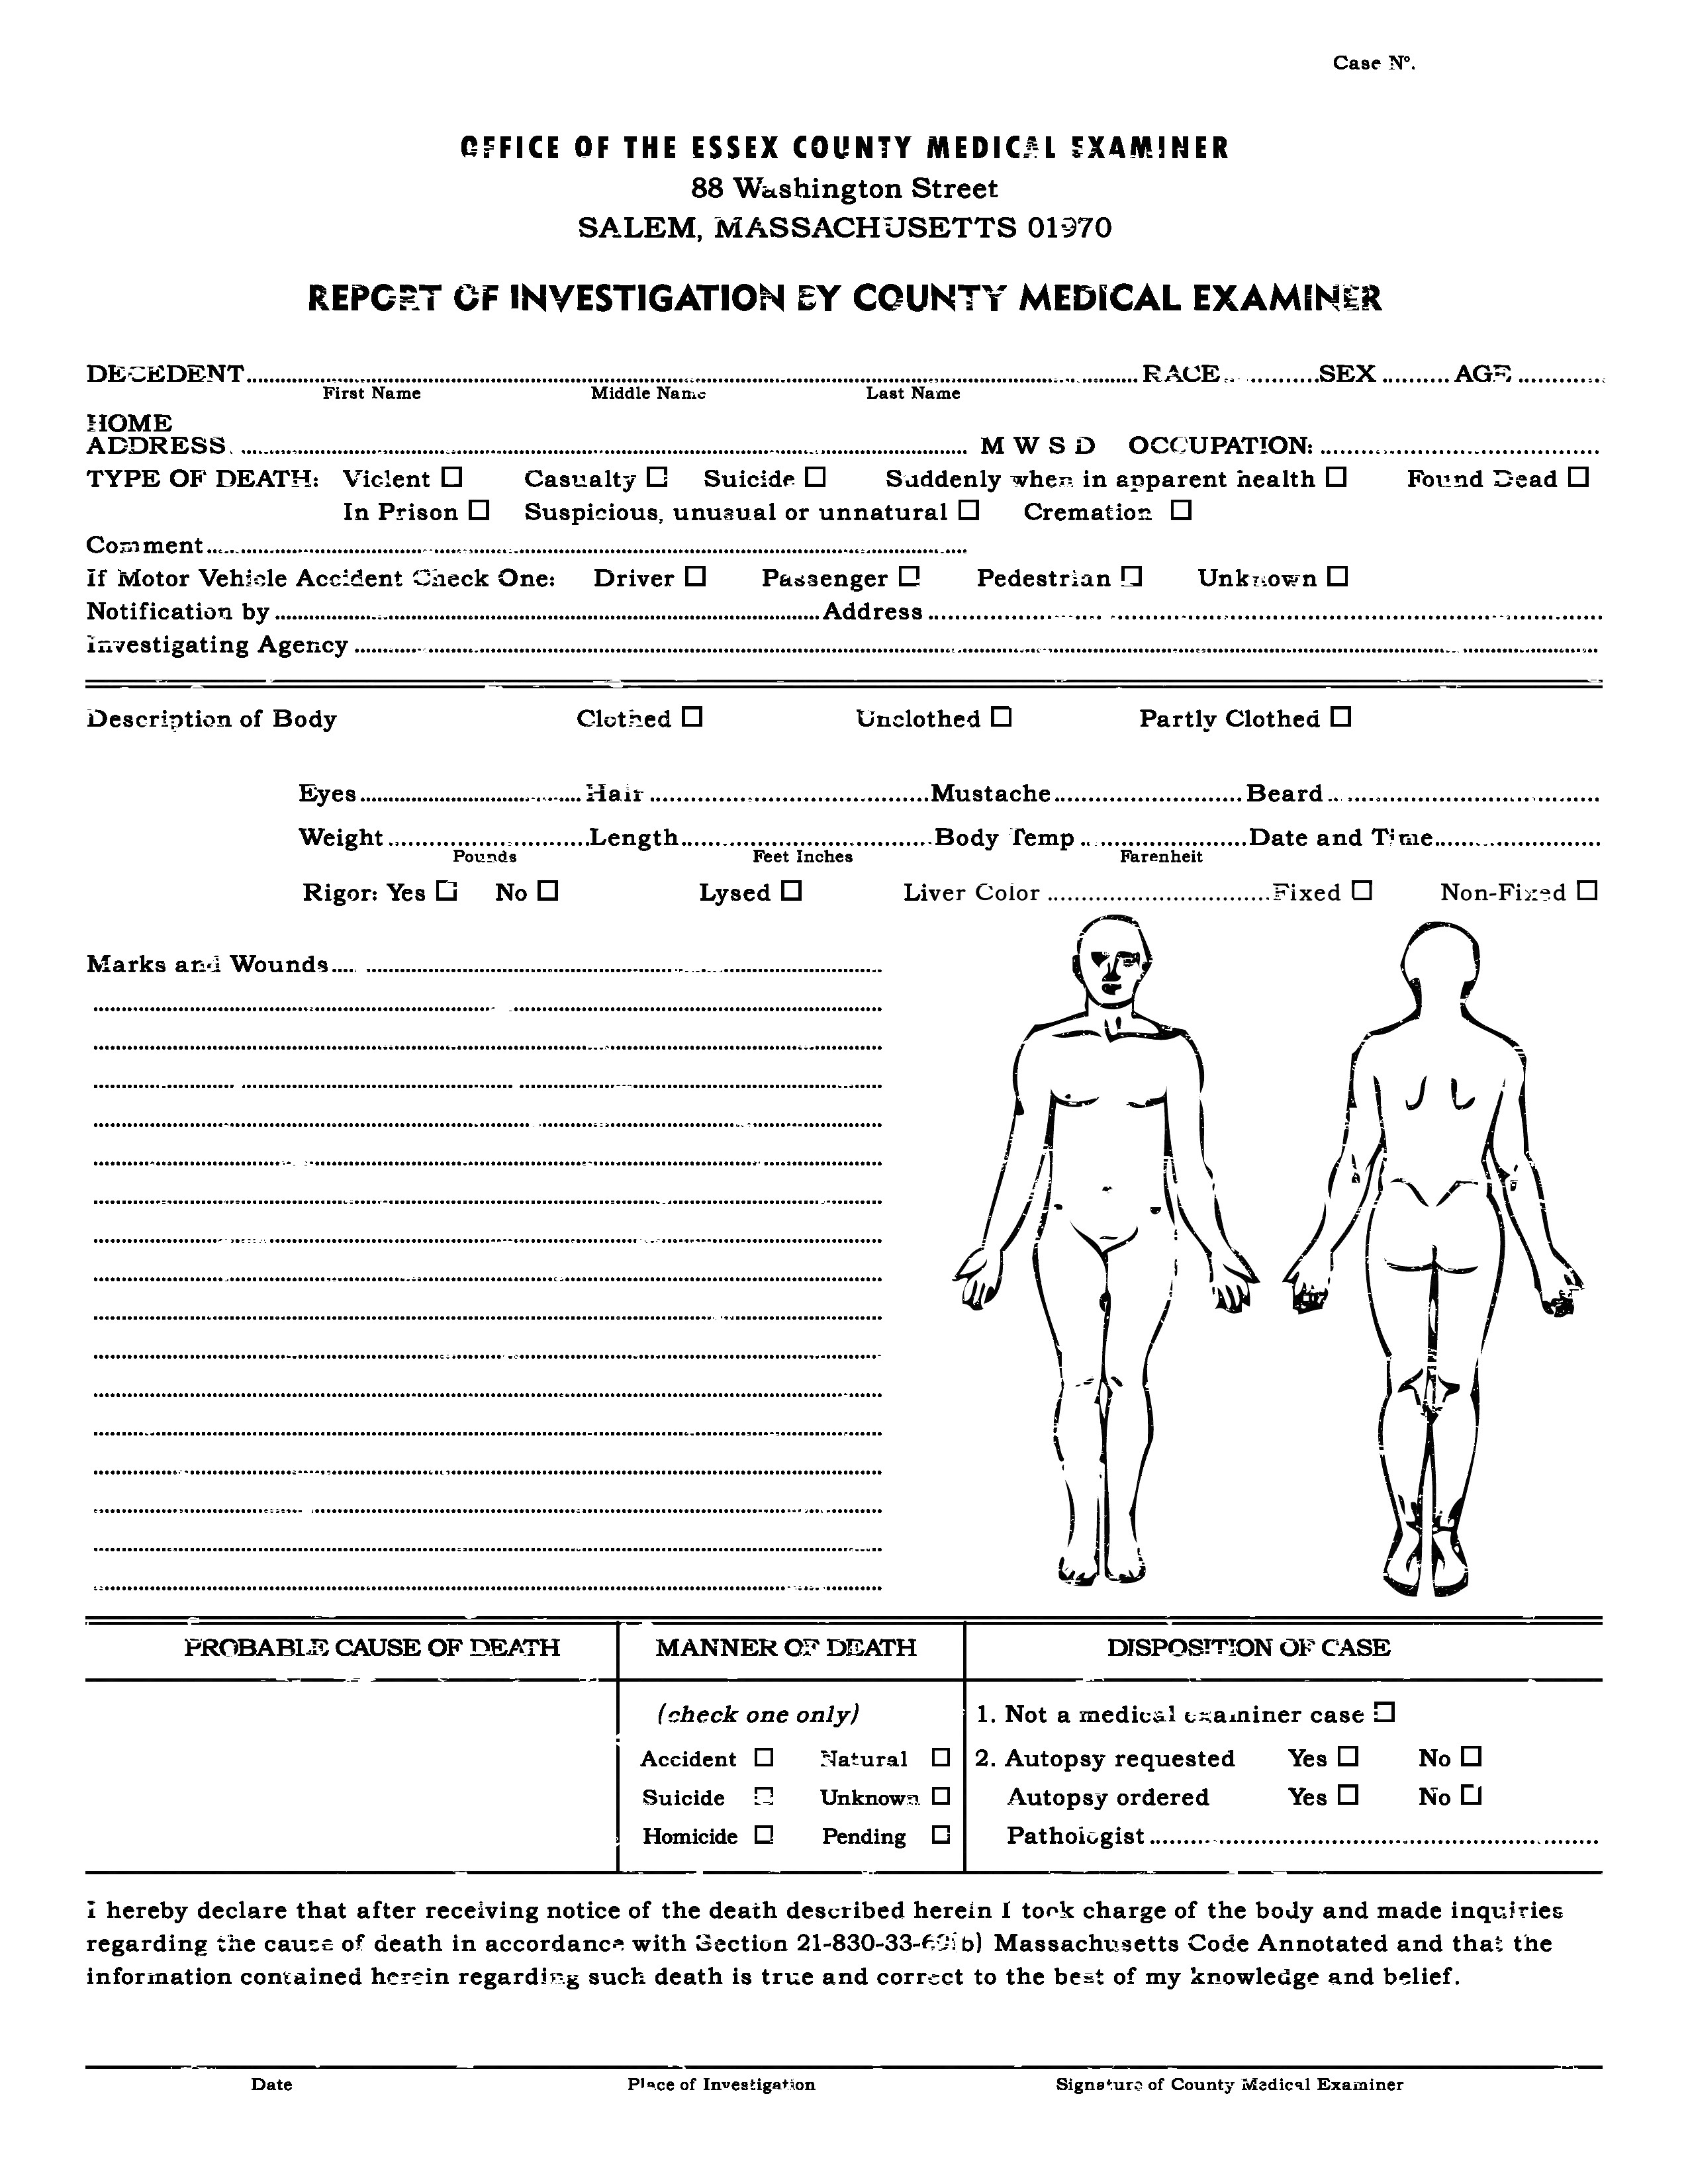 Autopsy Report Template – Atlantaauctionco Inside Autopsy Report Template